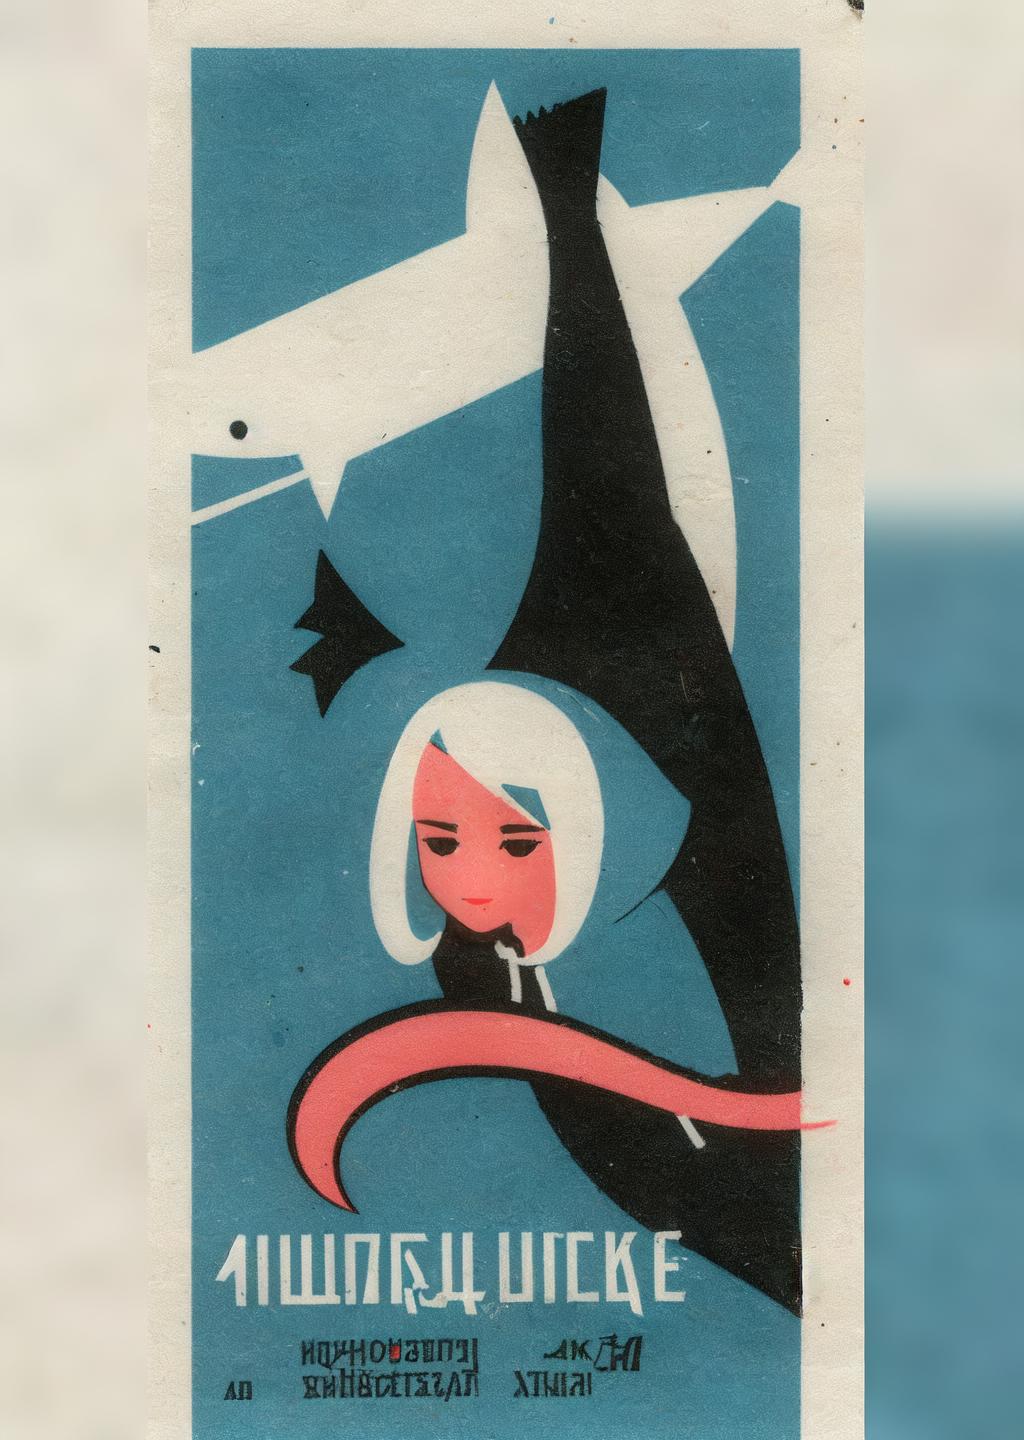 Soviet matchbox cover image by Svyat